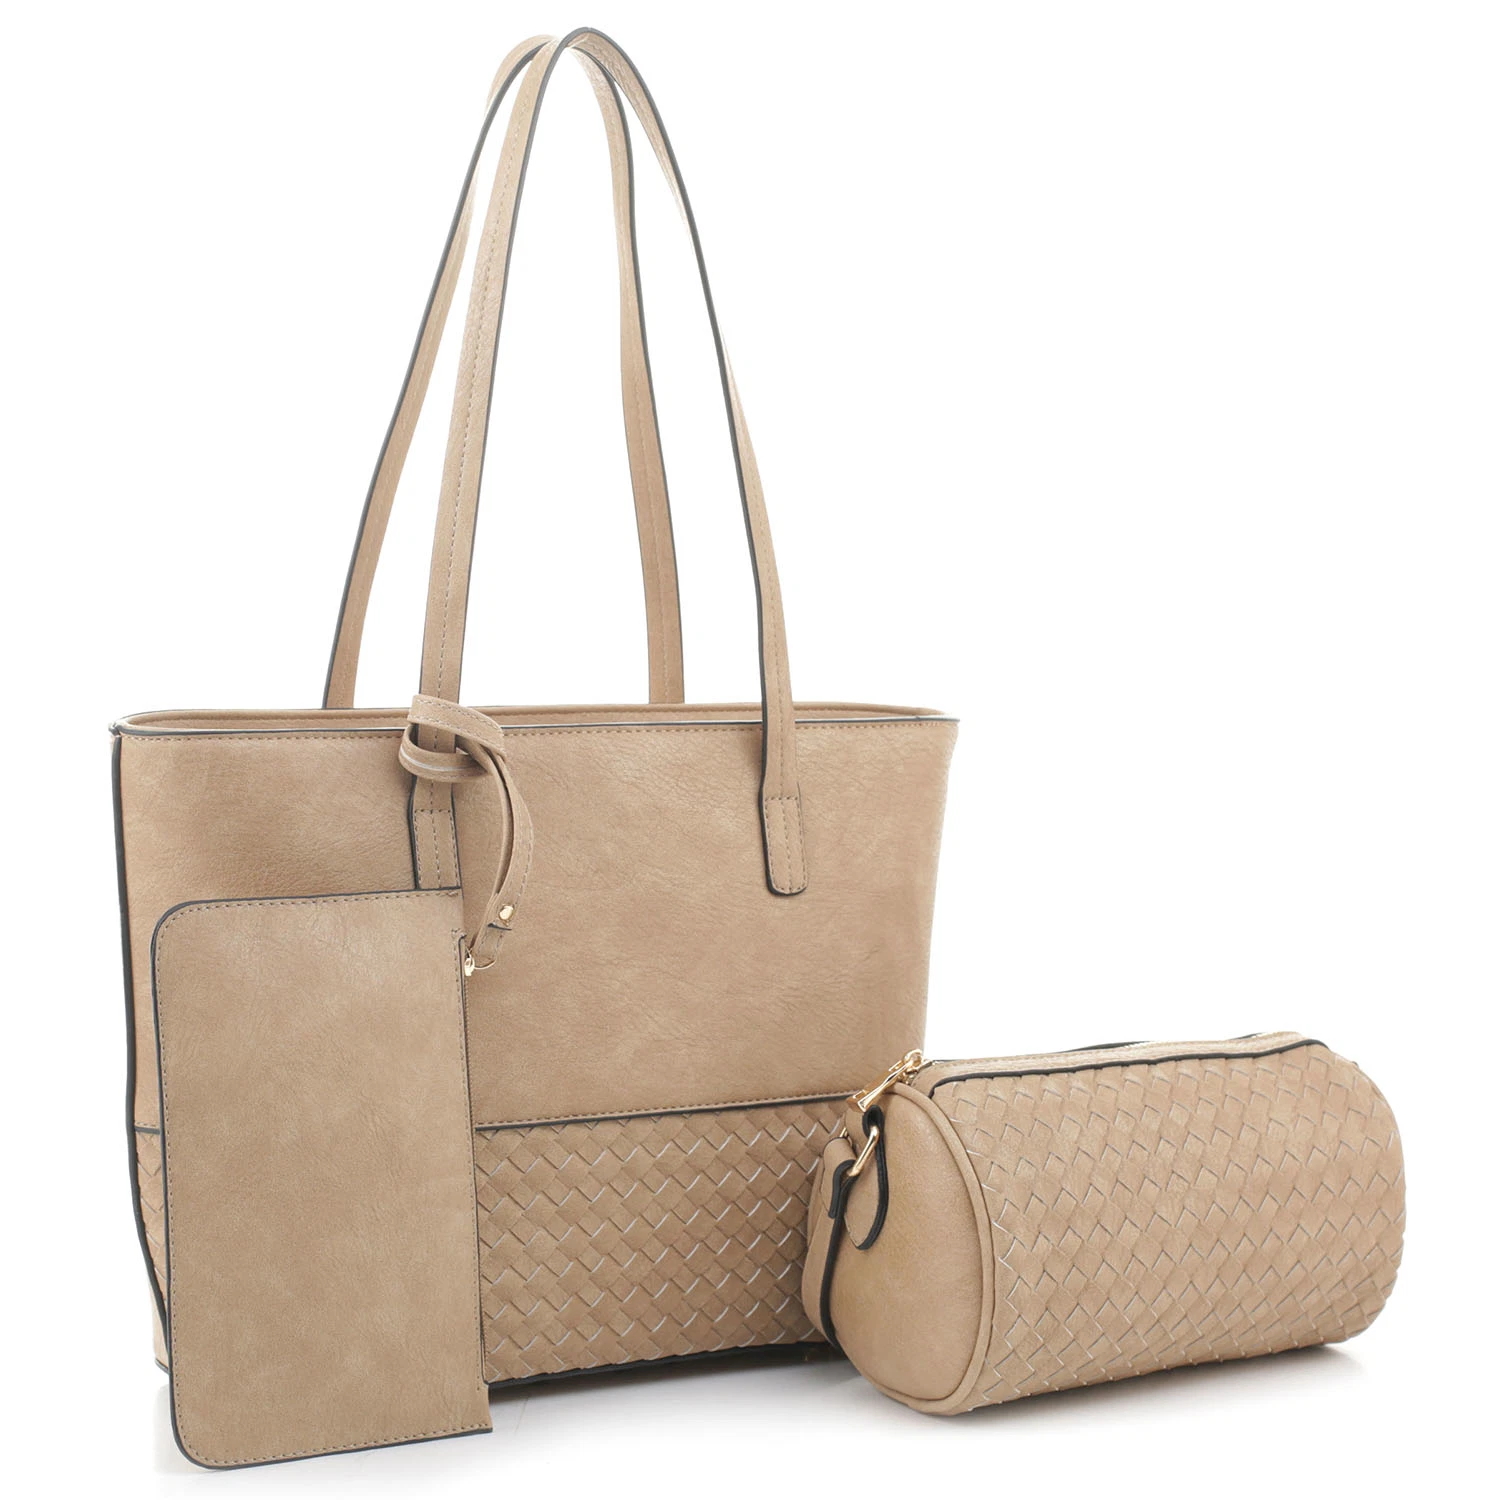 Lady Fashion PU Leather Woven 3-in-1 Shopper Set Handbag Women Tote Bag